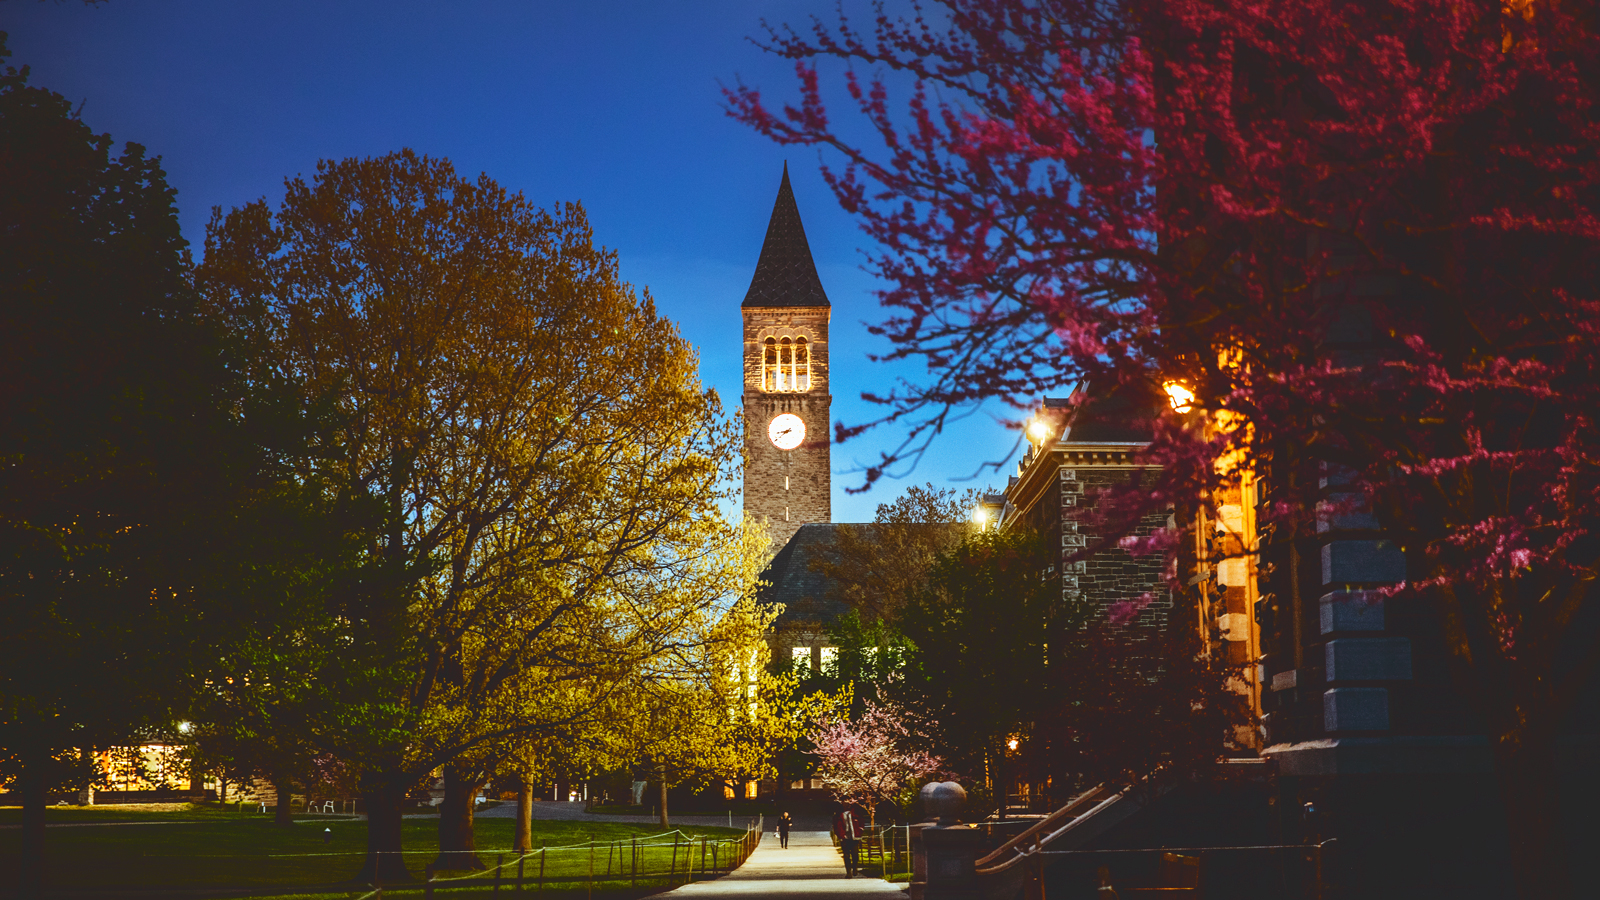 The Arts Quad is illuminated as dusk falls on campus.